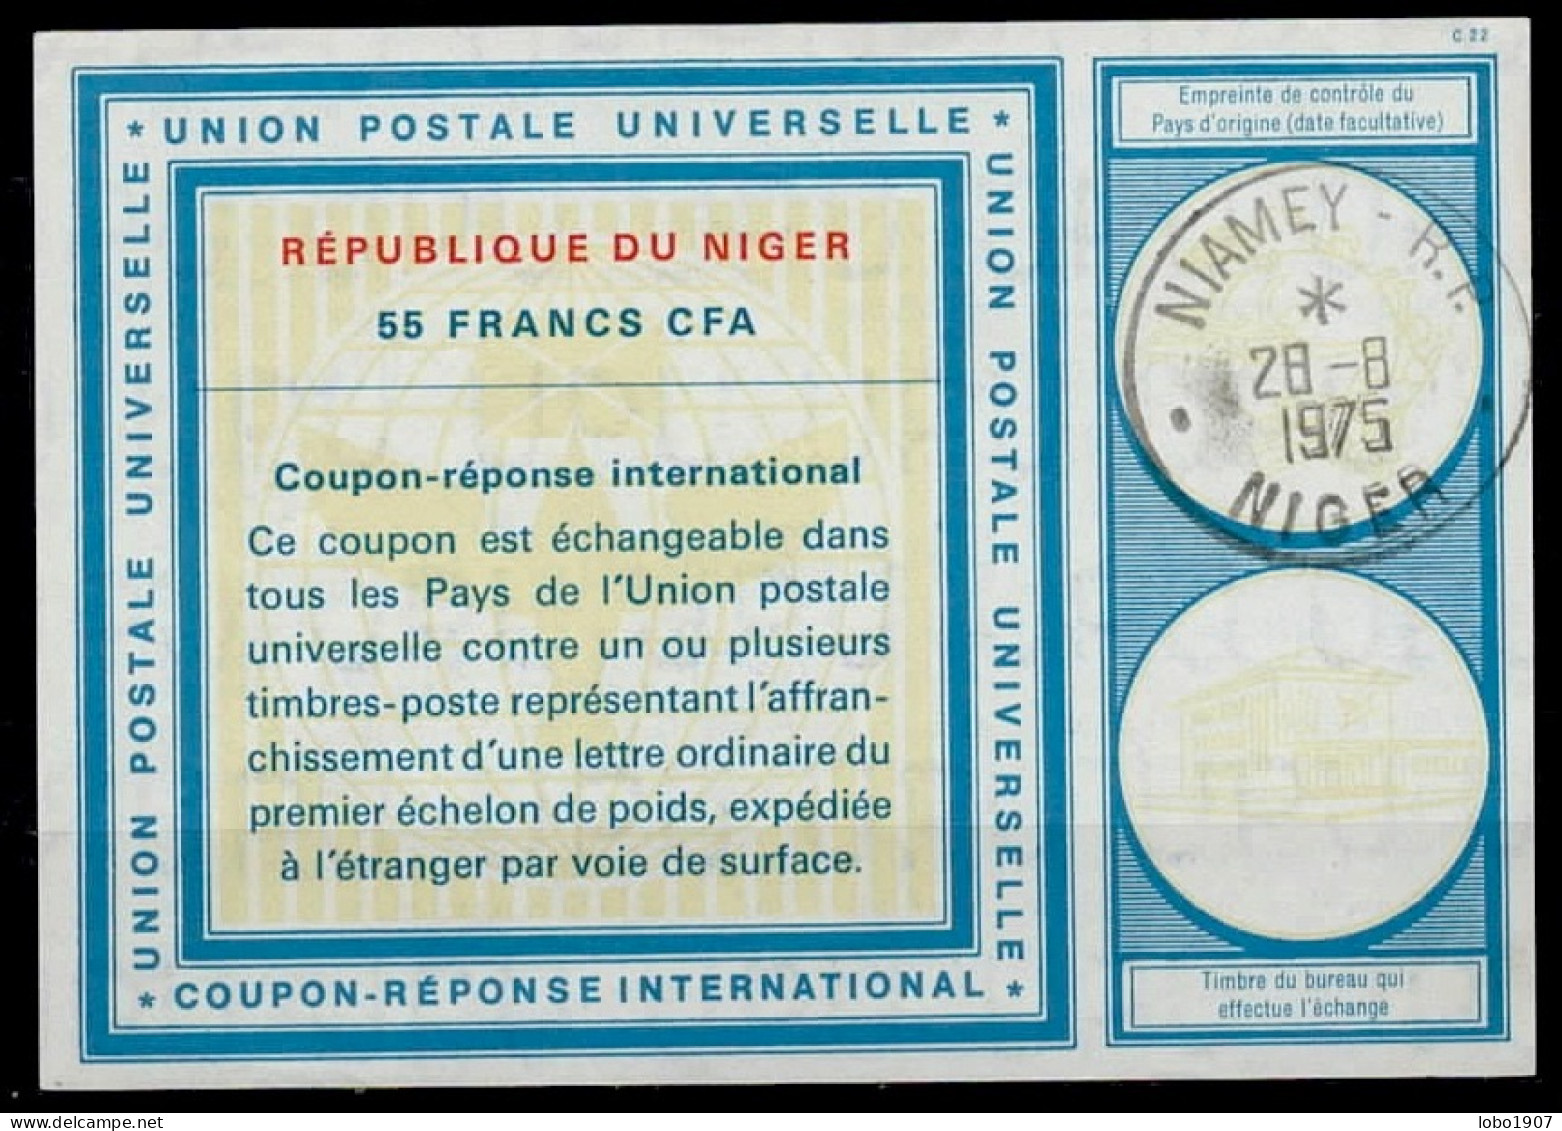 NIGER  Vi20 55 FRANCS CFA  International Reply Coupon Reponse Antwortschein IRC IAS Cupon Respuesta NIAMEY R.P. 28.08.75 - Niger (1960-...)